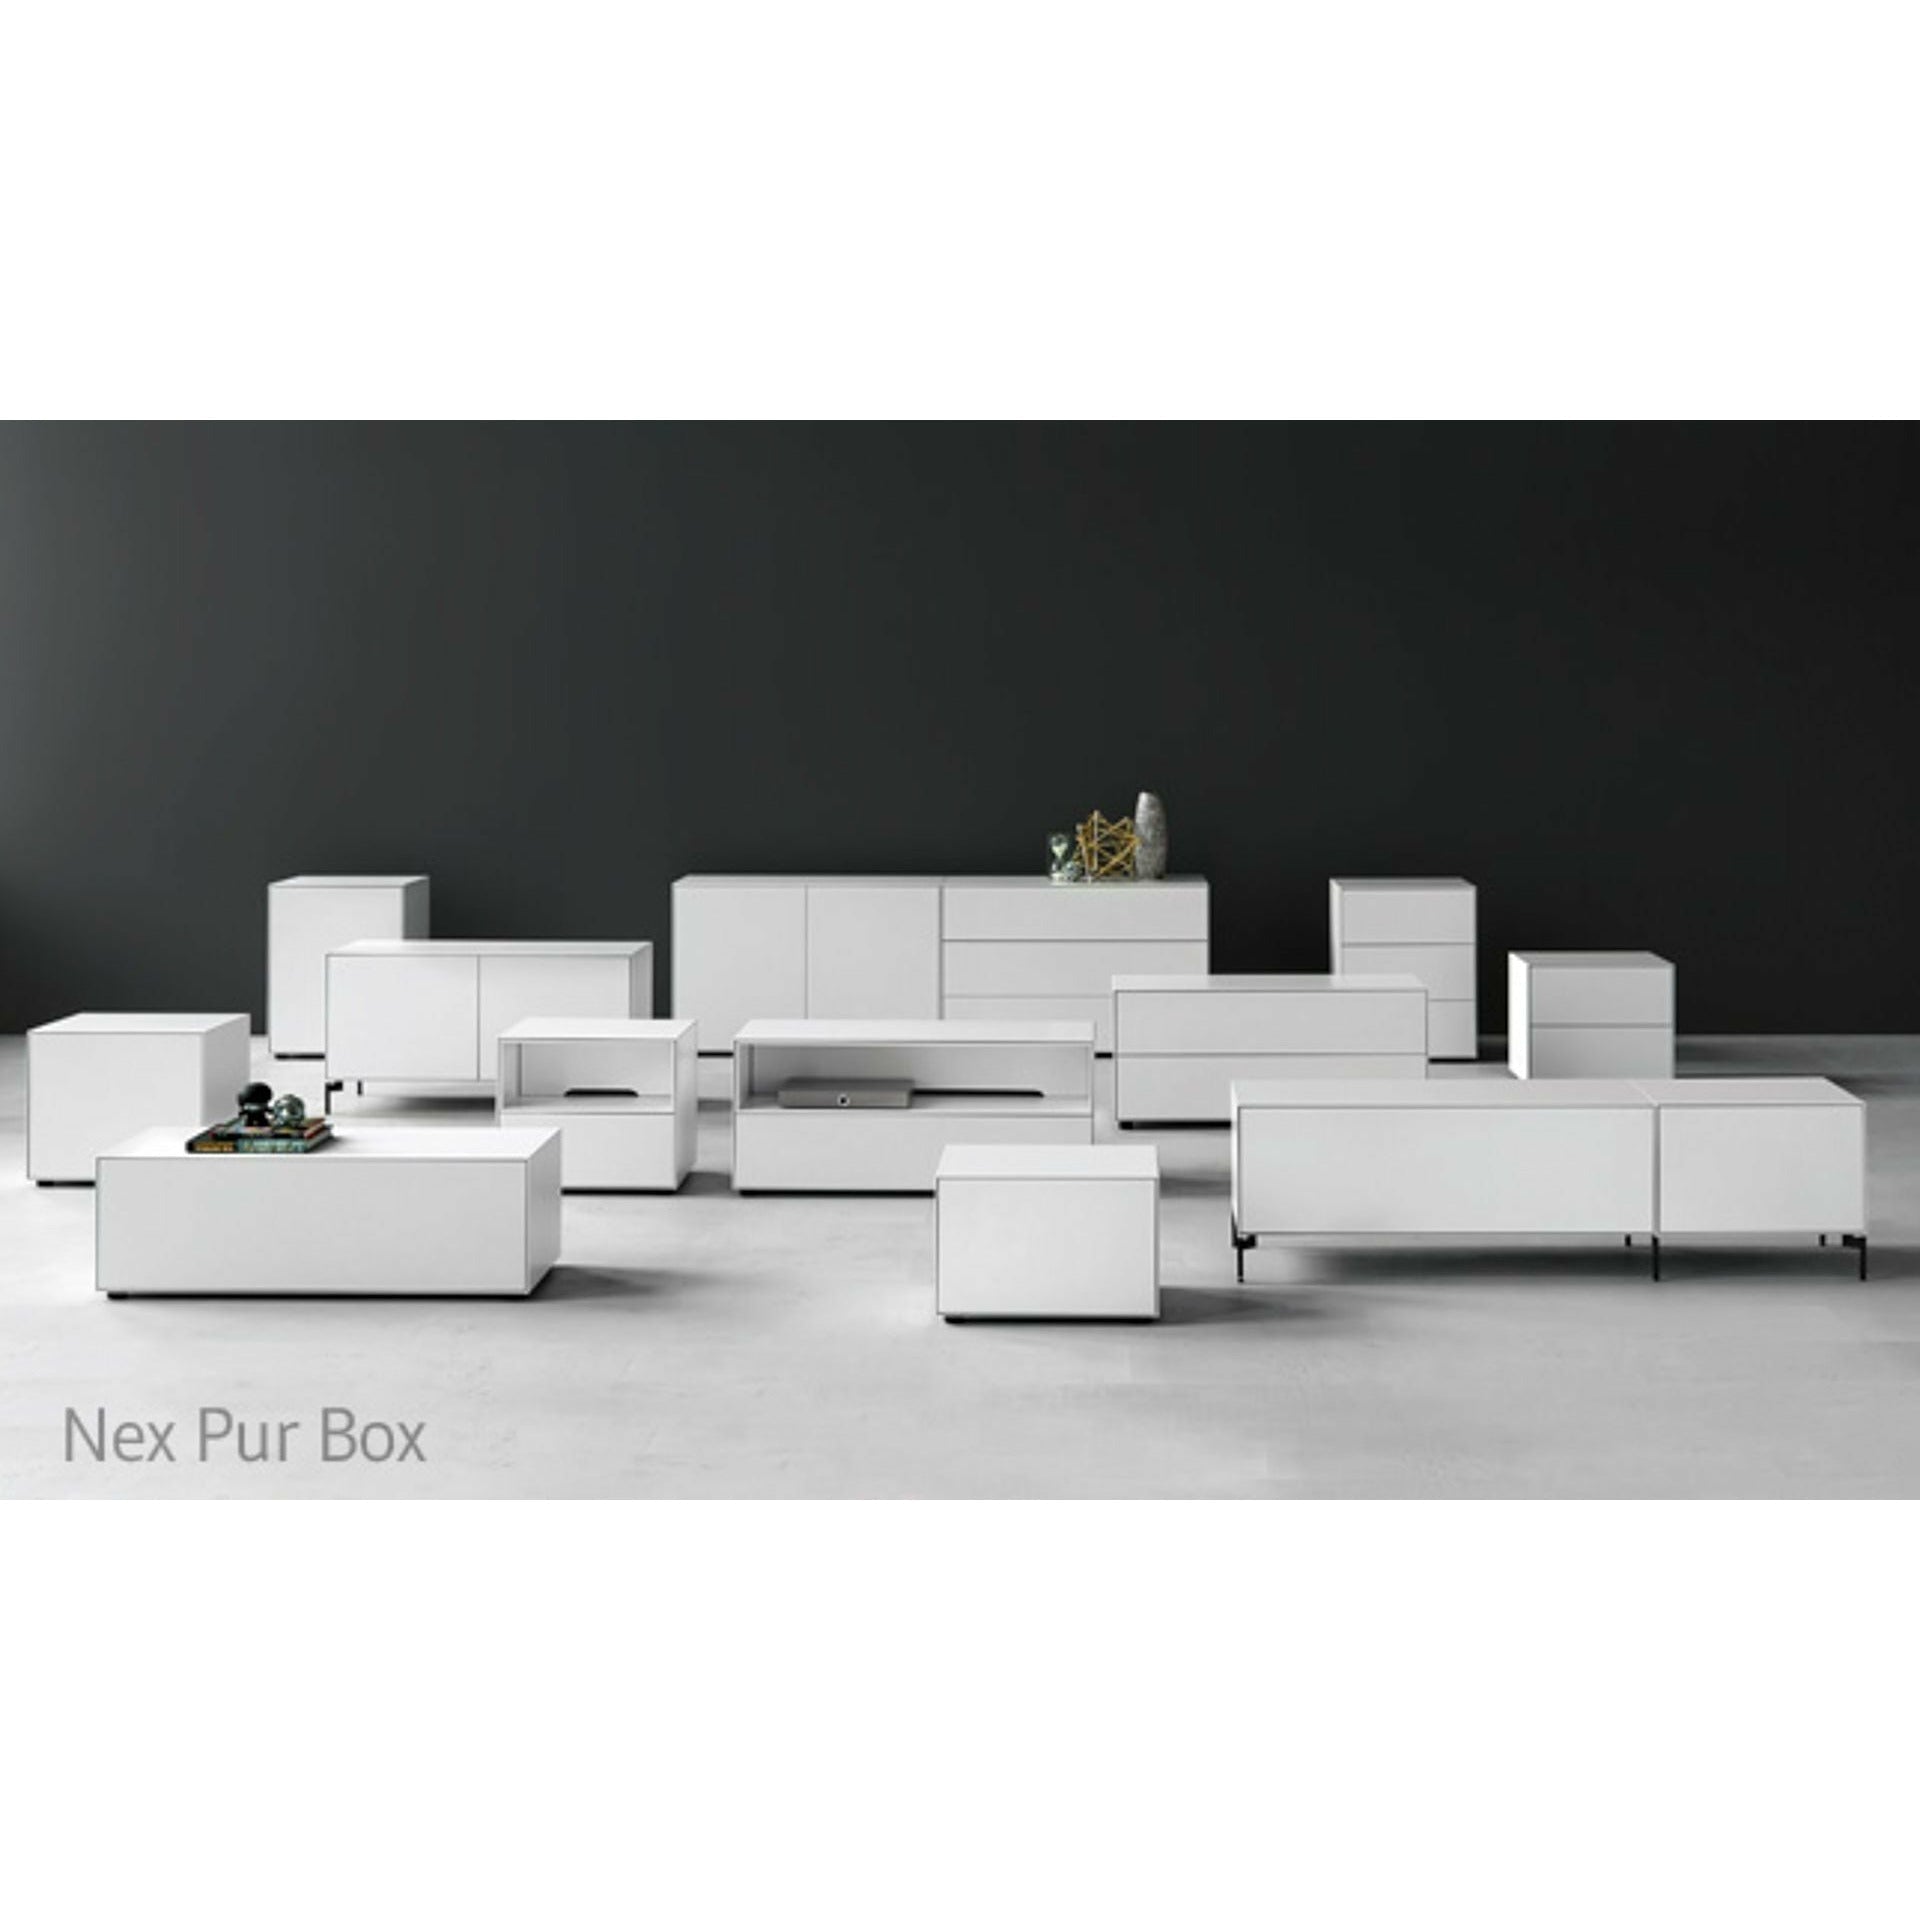 Piure Nex Pur -laatikon ovi HX W 50x180 cm, 1 hylly